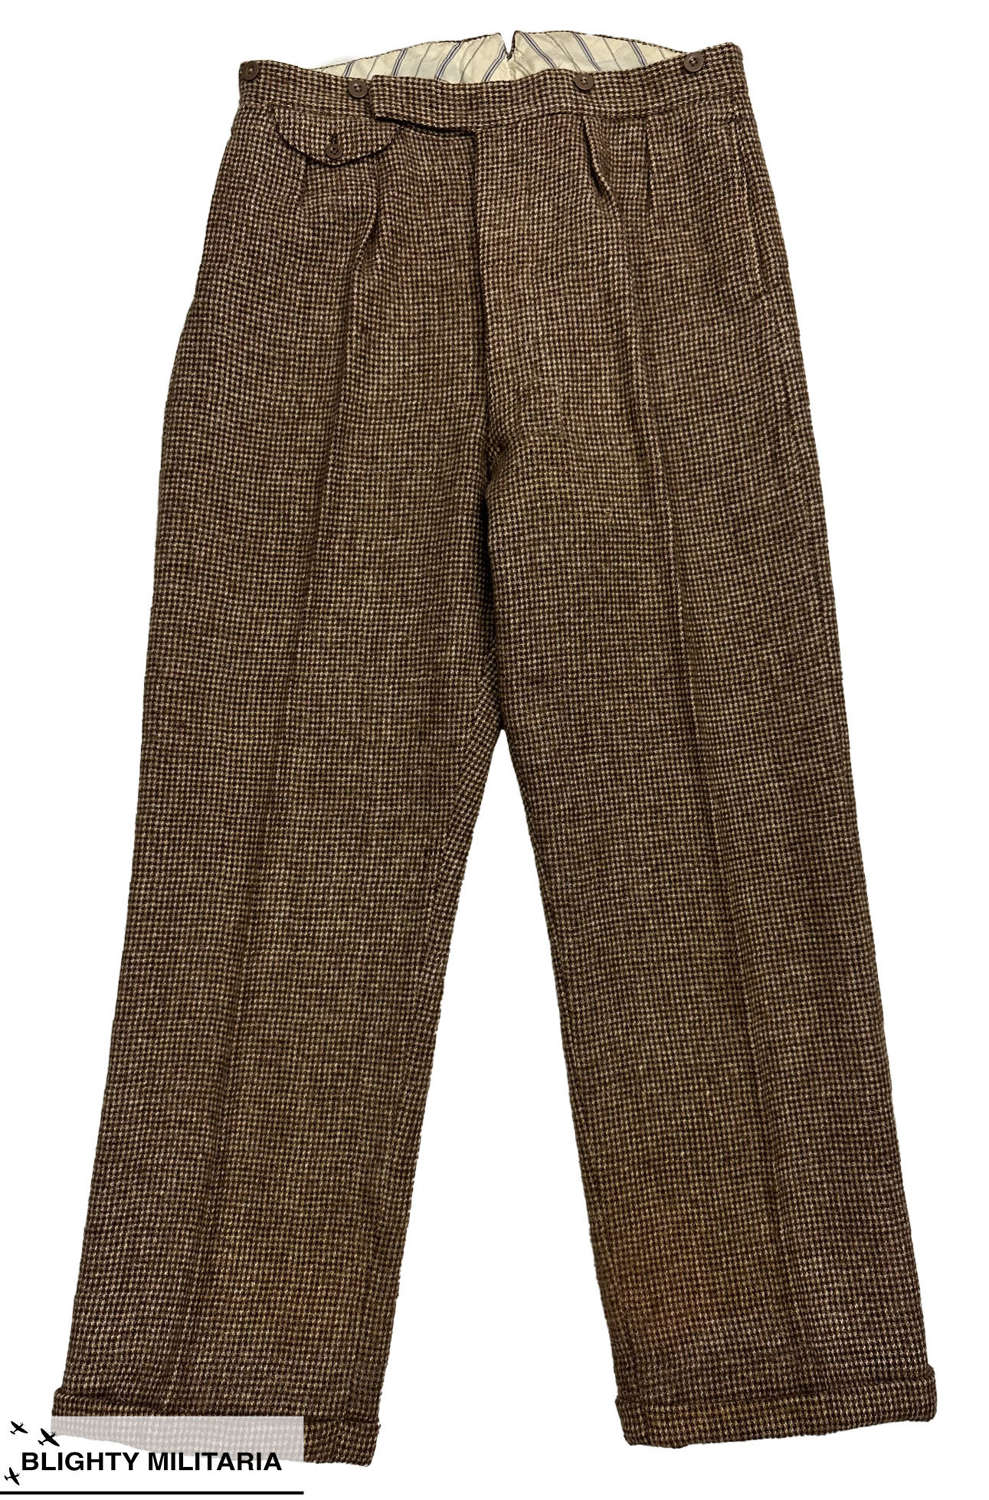 Original 1940s Harris Tweed Trousers - Size 37x32